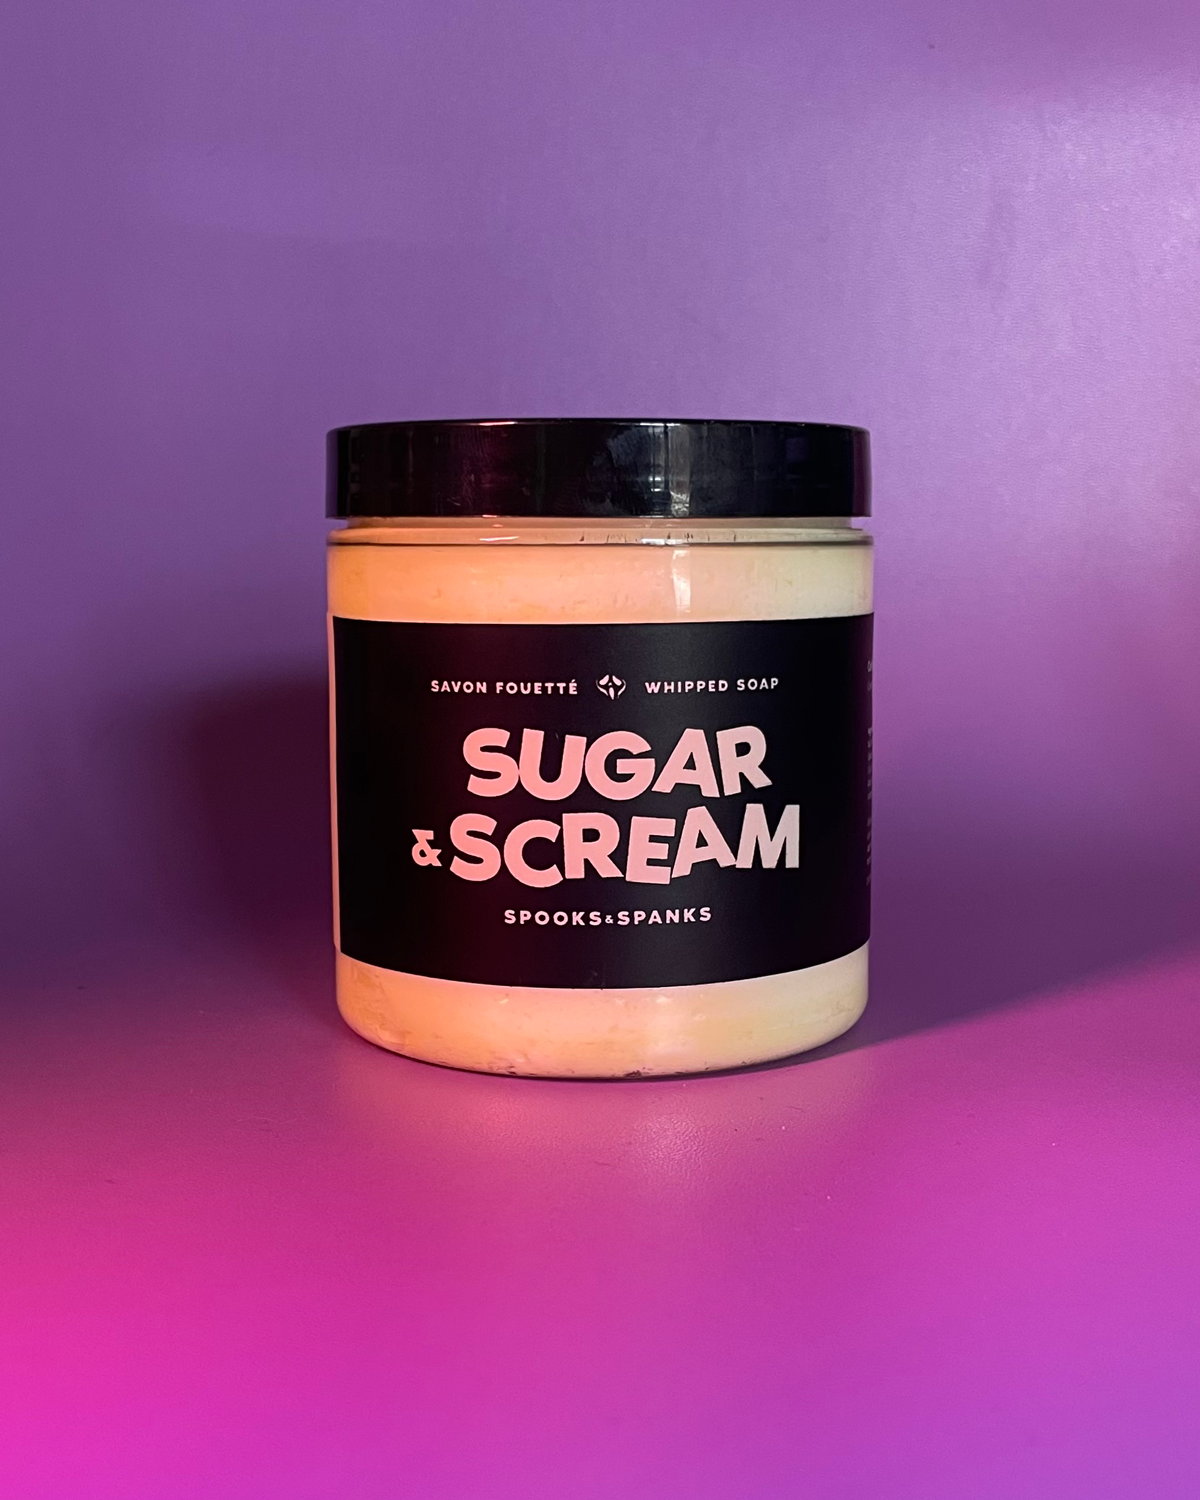 Sugar & Scream creamy caramel coffee whipped soap